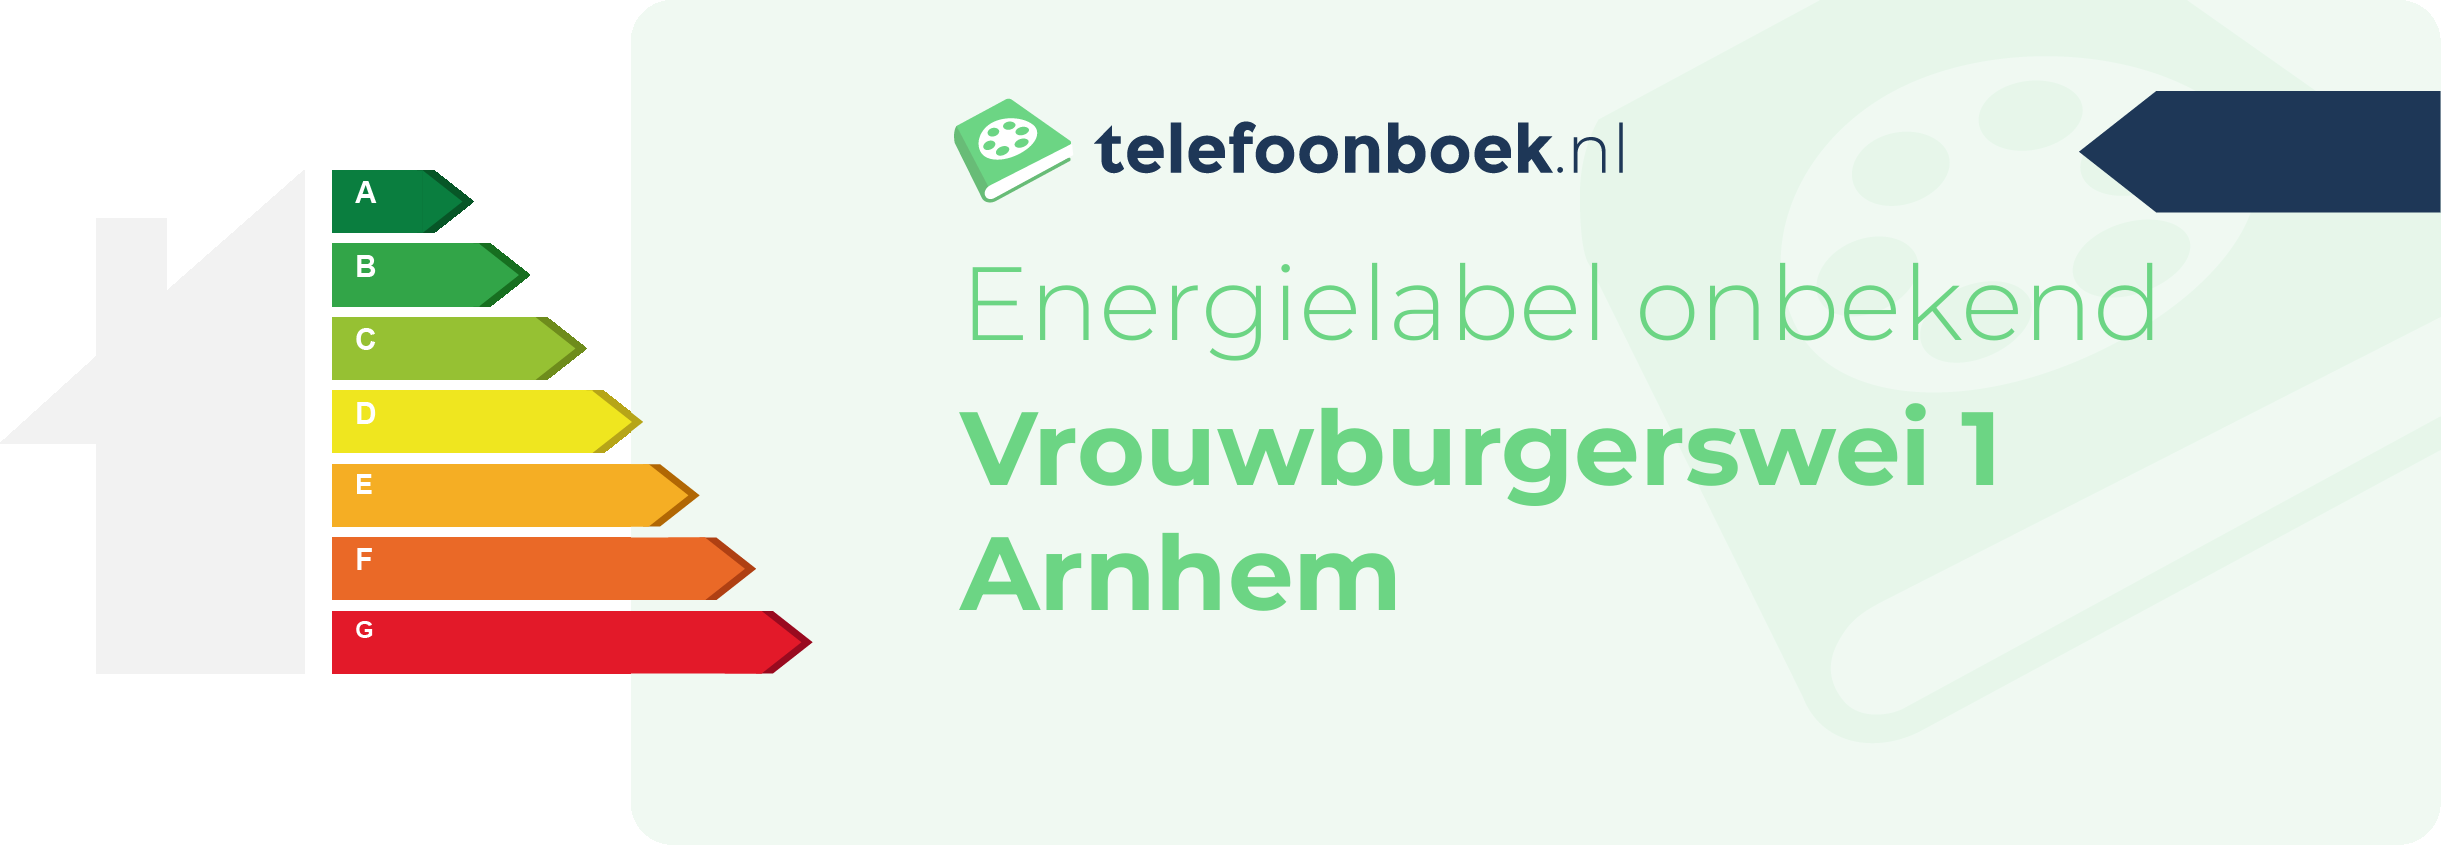 Energielabel Vrouwburgerswei 1 Arnhem